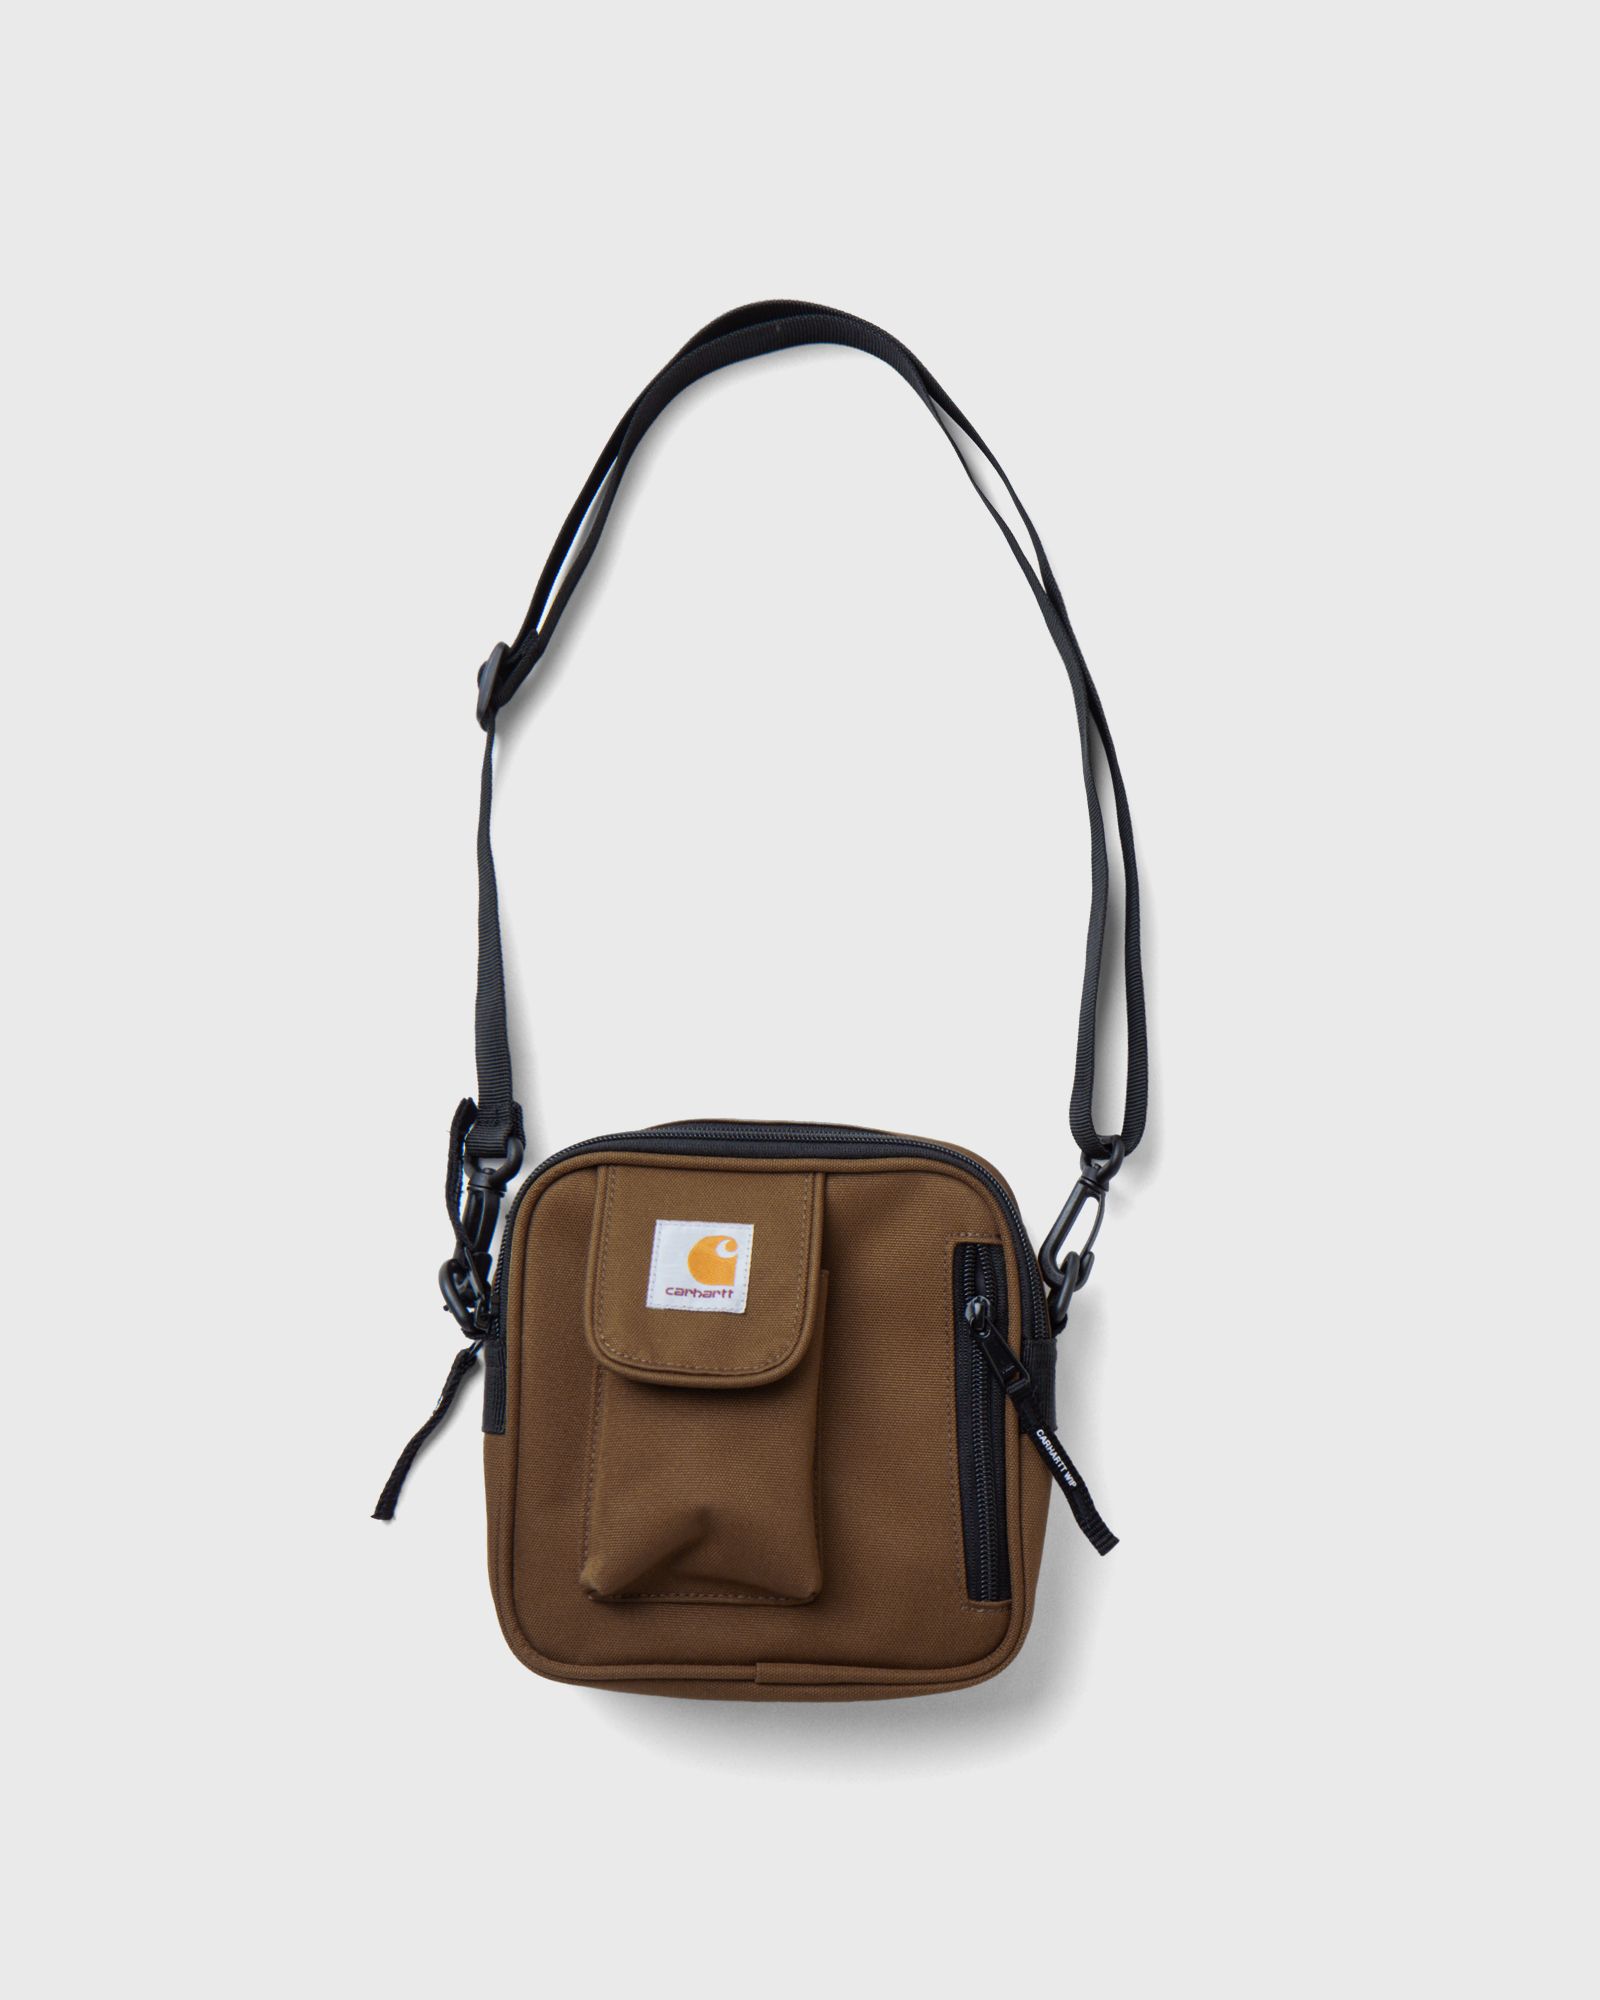 Carhartt WIP - essentials bag, small men messenger & crossbody bags brown in größe:one size